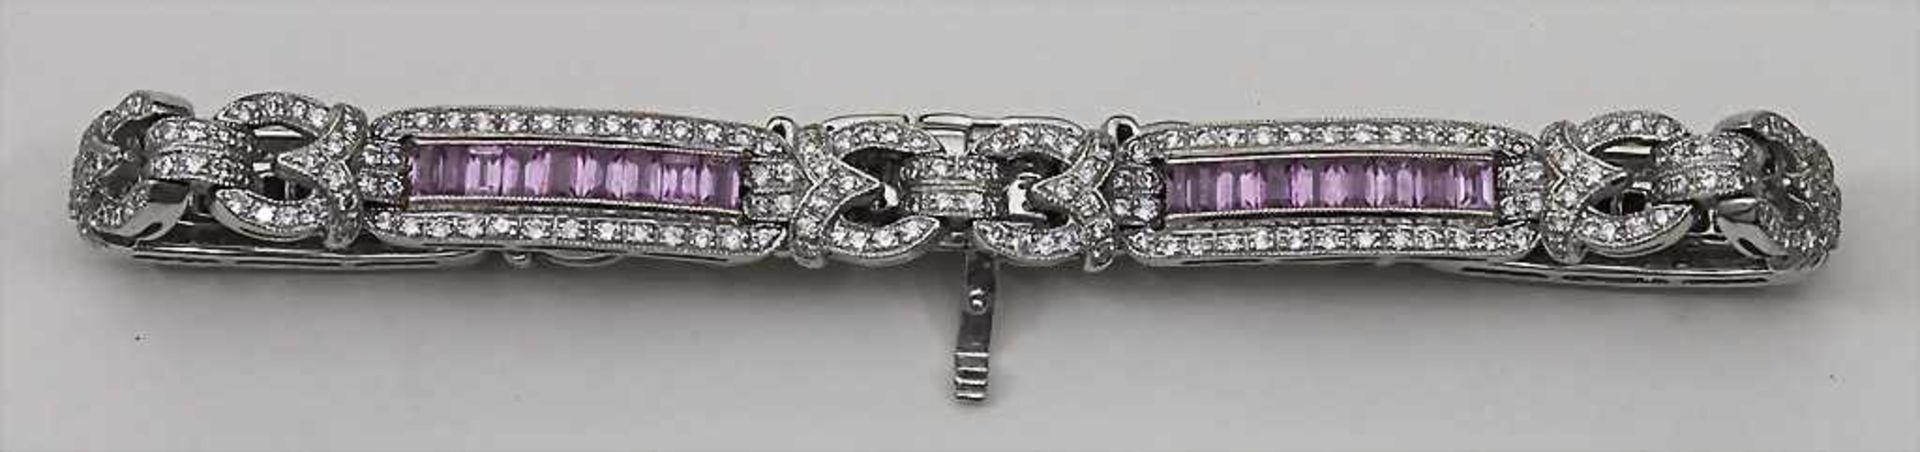 Art Déco Armband mit Saphiren / An Art Déco bracelet, England, um 1925Material: 18 Kt 750/000 WG, - Image 2 of 4